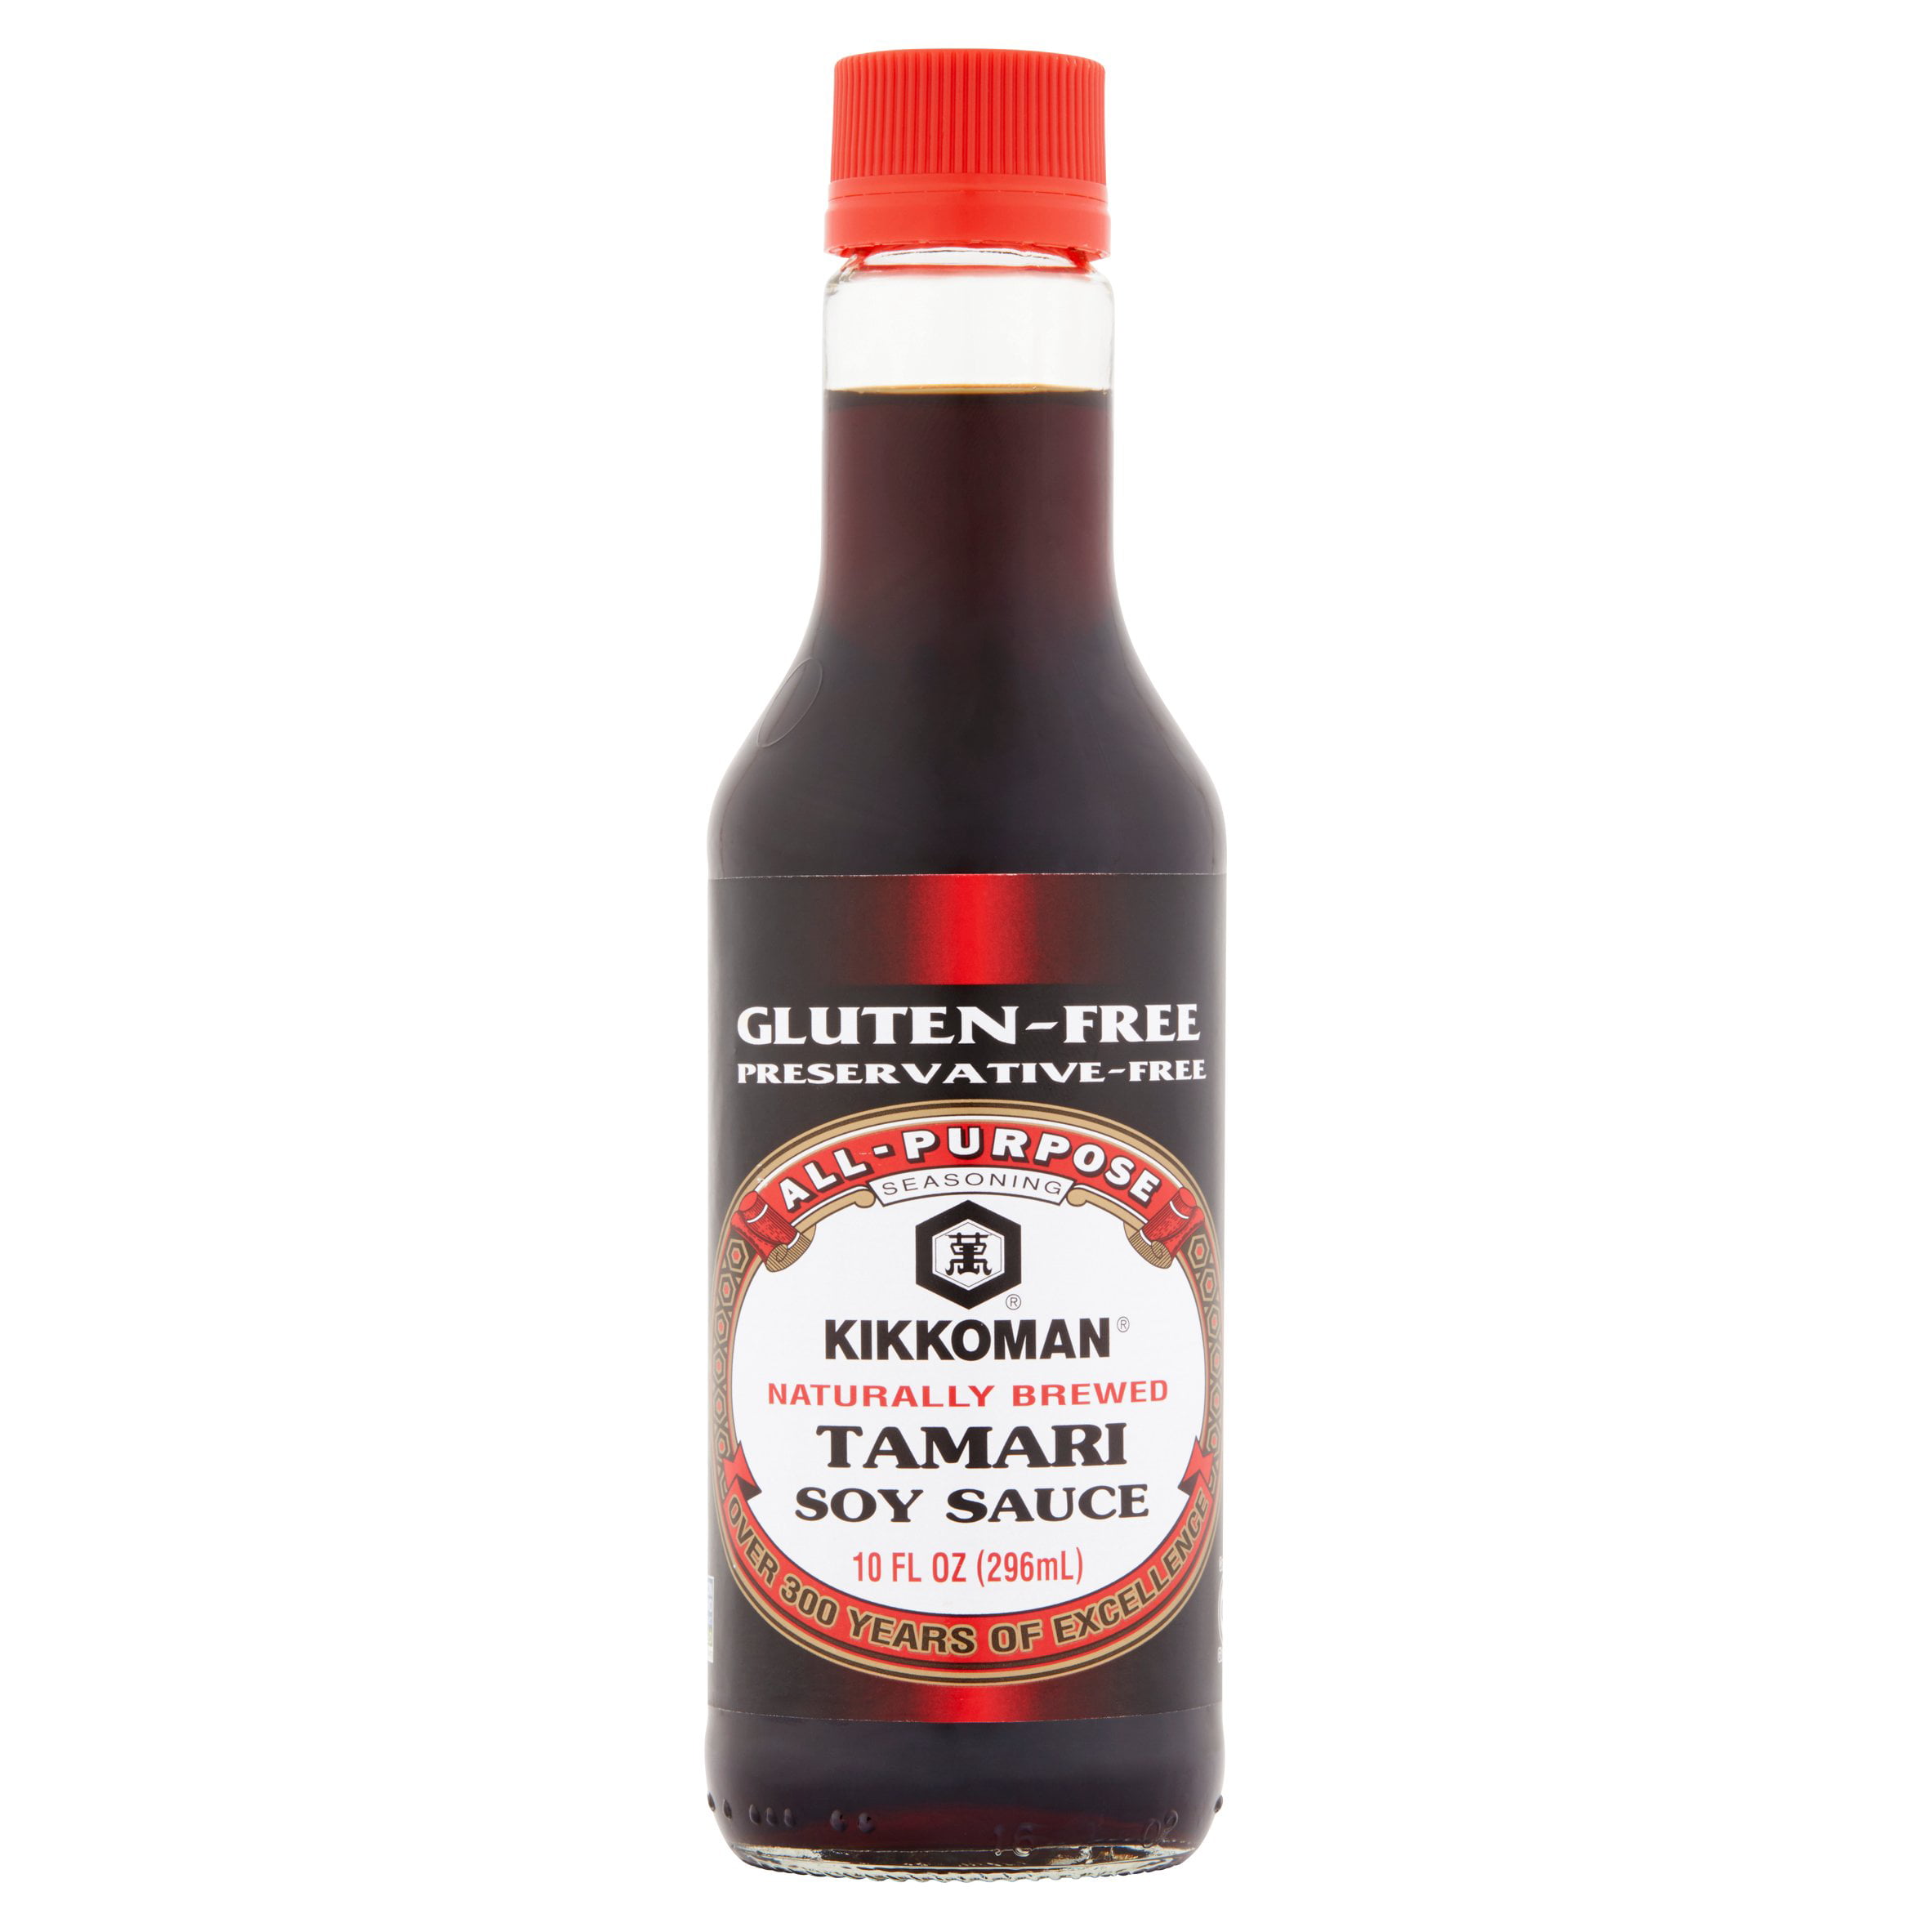 Kikkoman Tamari Soy Sauce, 10 fl oz, 6 pack - Walmart.com - Walmart.com